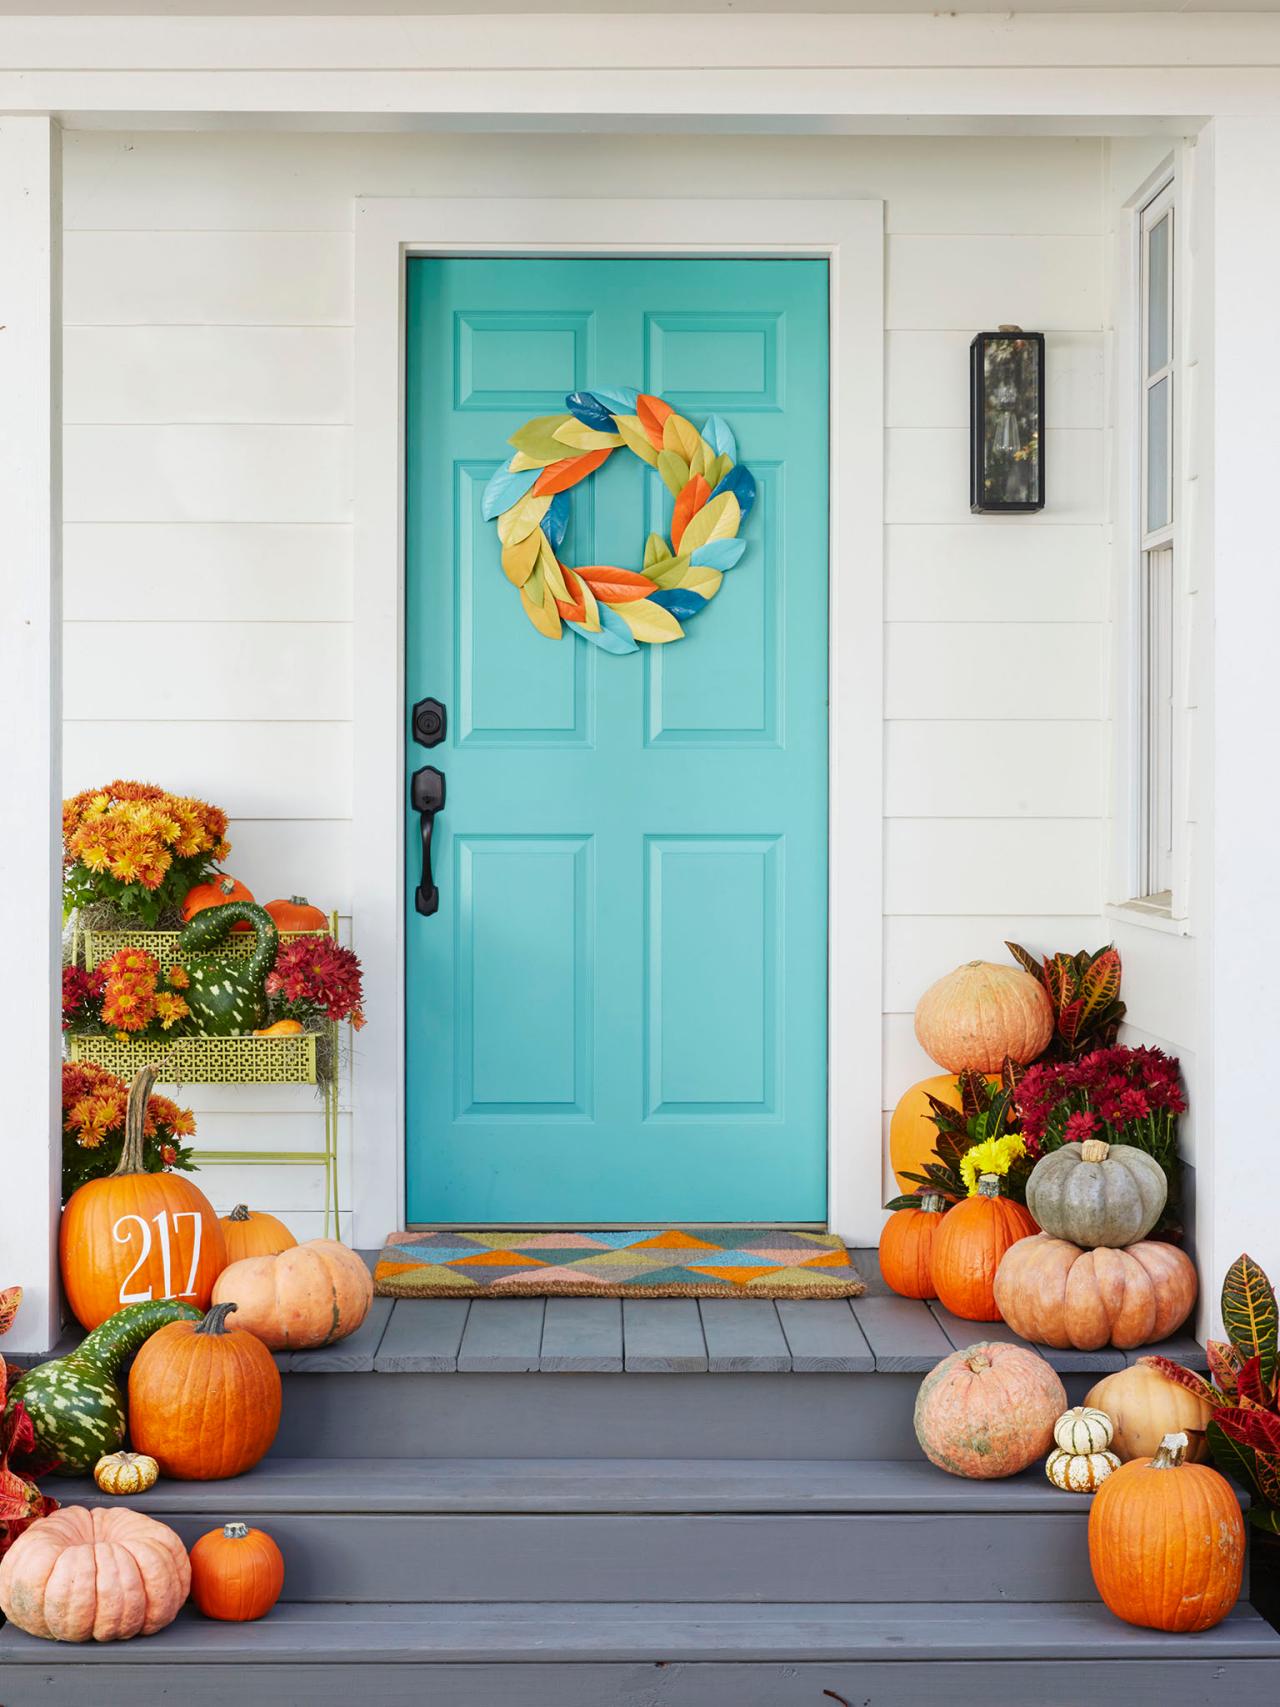 5 Tips for Fall Porch Decorating | HGTV's Decorating & Design Blog | HGTV